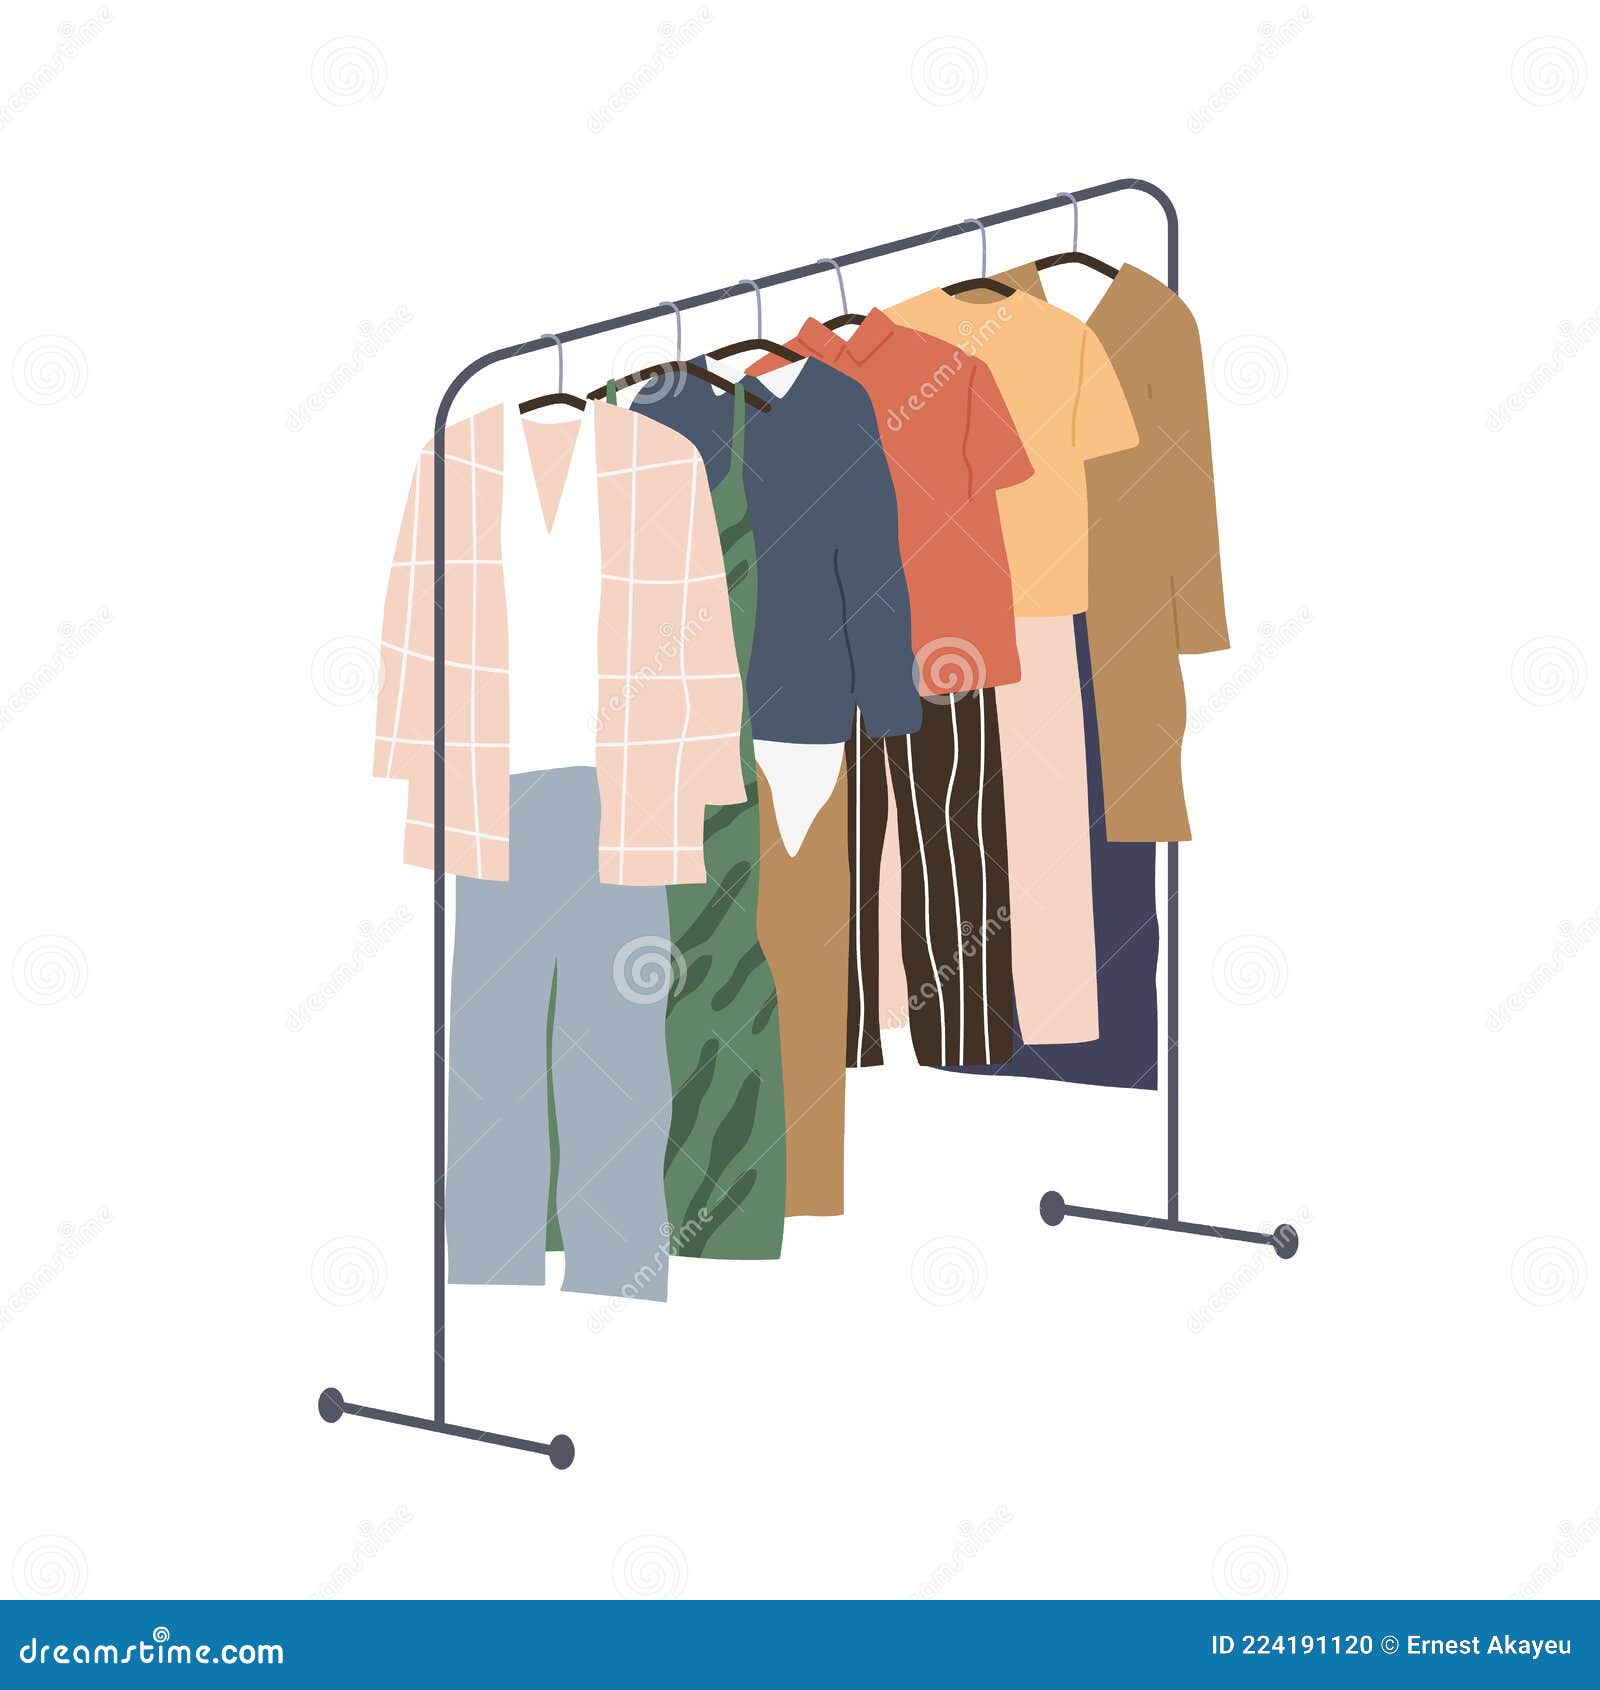 https://thumbs.dreamstime.com/z/wardrobe-modern-women-clothing-hanging-floor-hanger-rack-assortment-casual-apparels-collection-stylish-summer-garments-flat-224191120.jpg